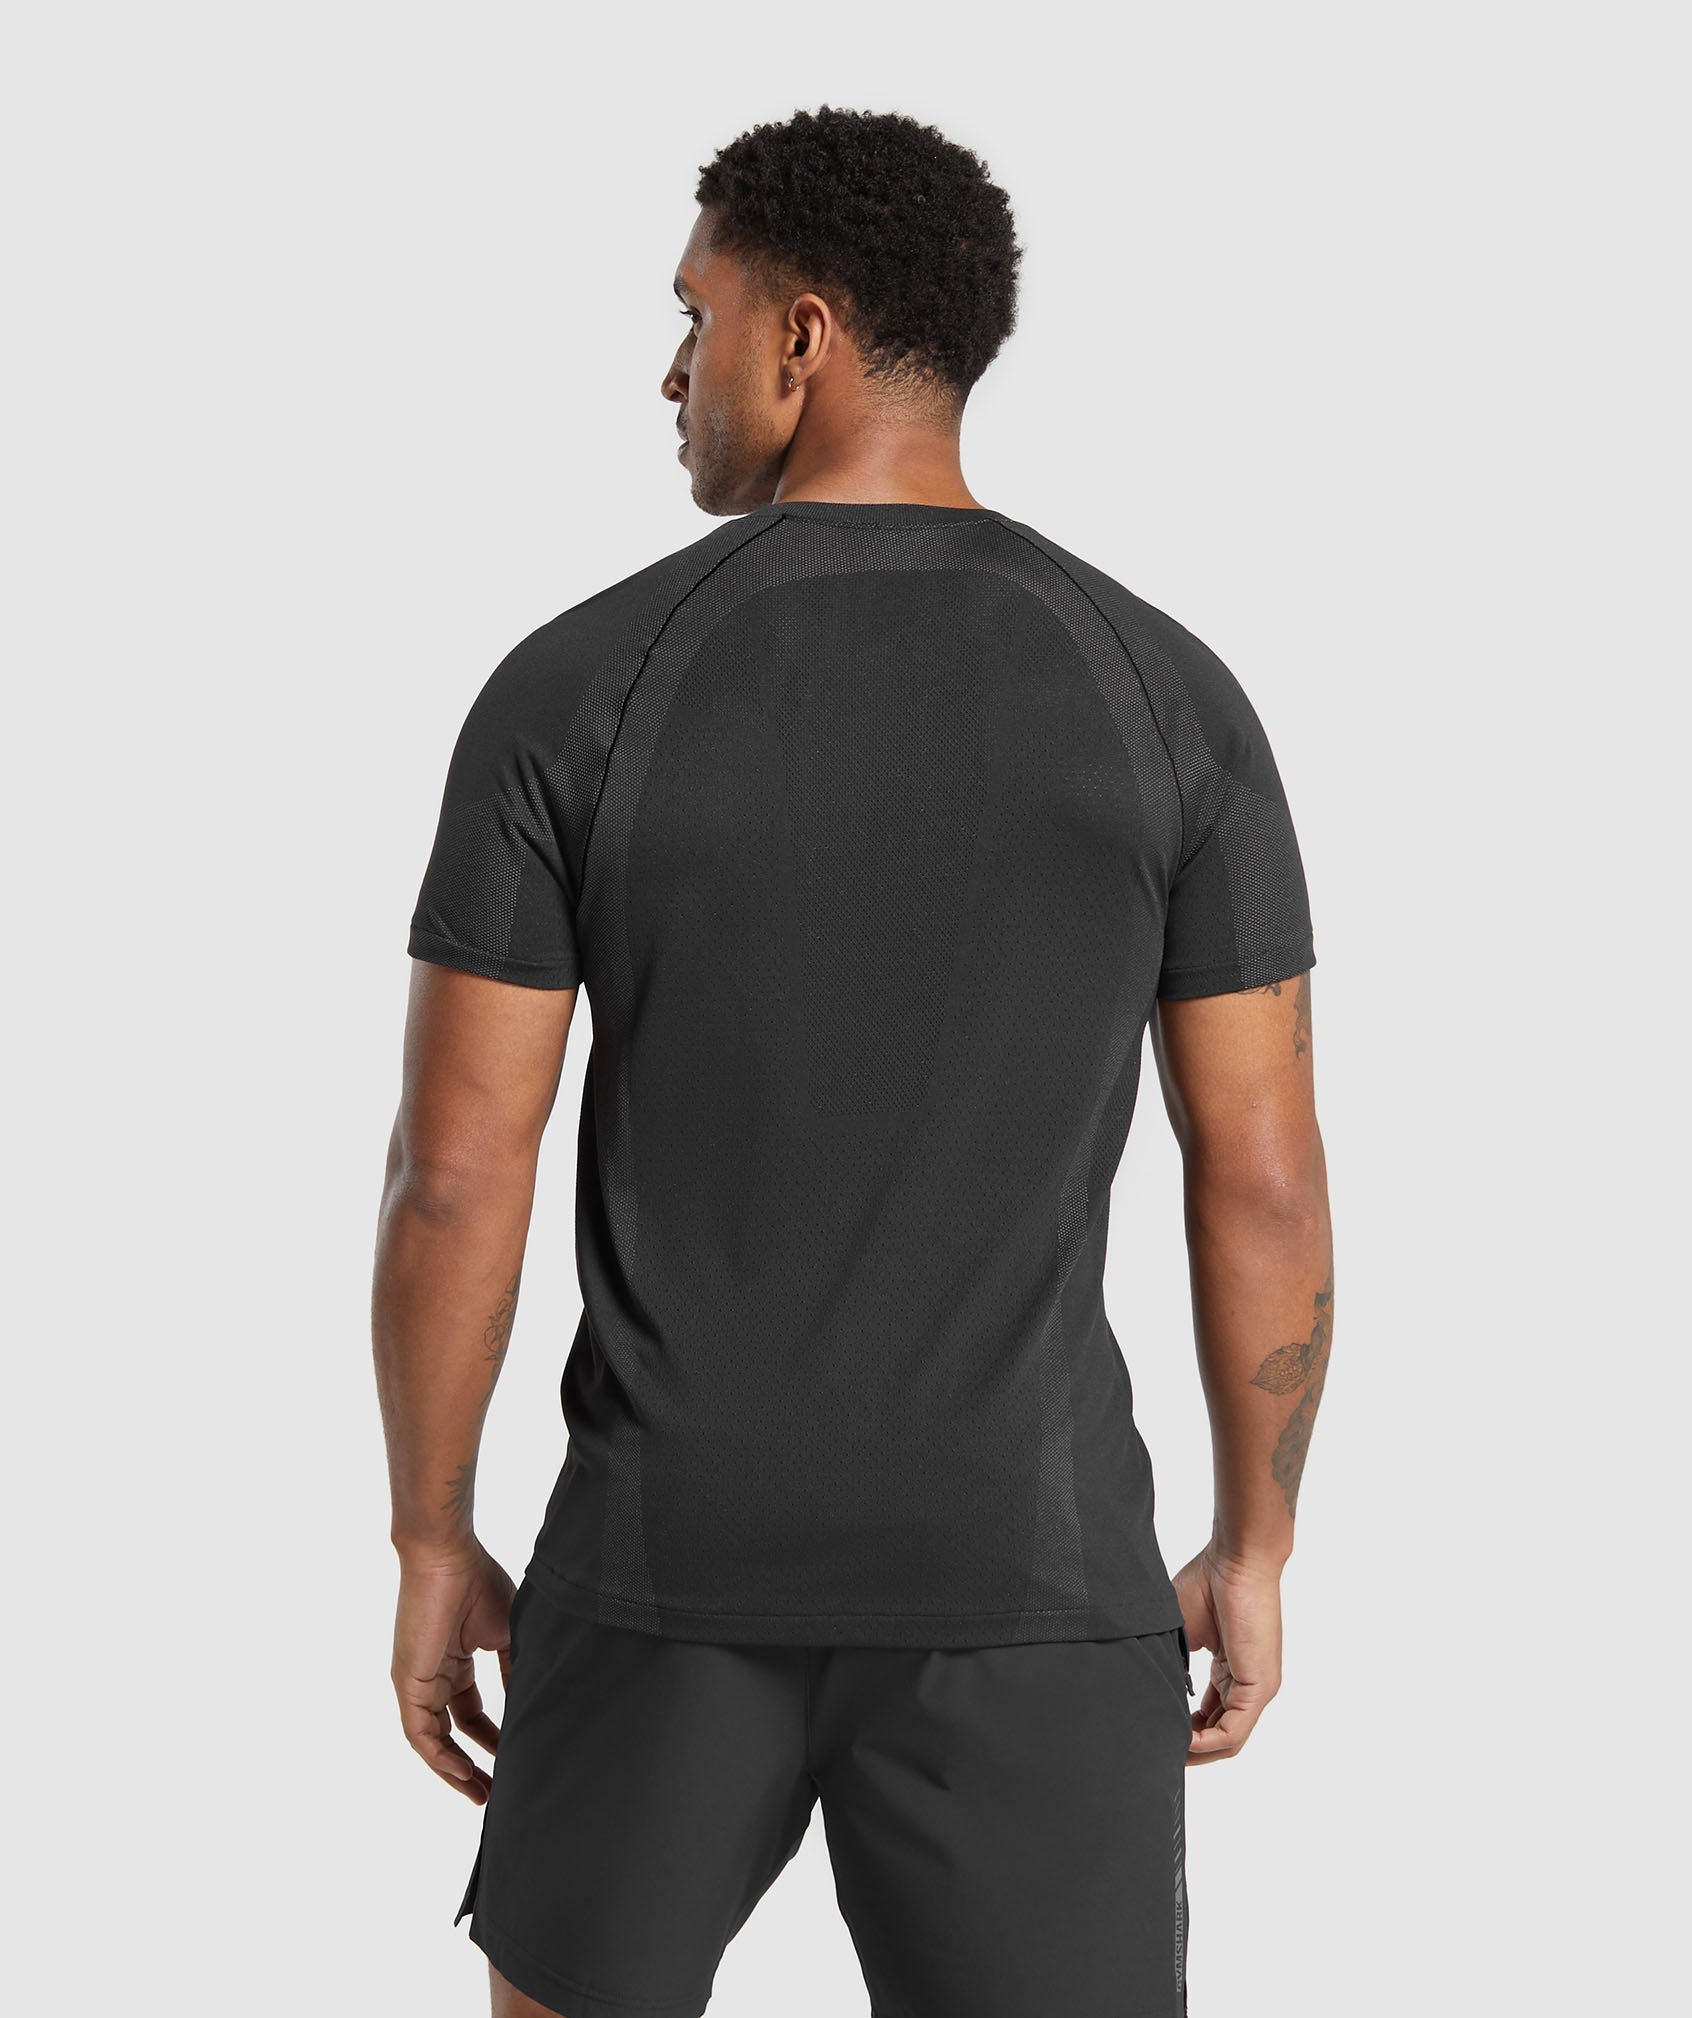 Apex Seamless T-Shirt in Black/Dark Grey - view 2